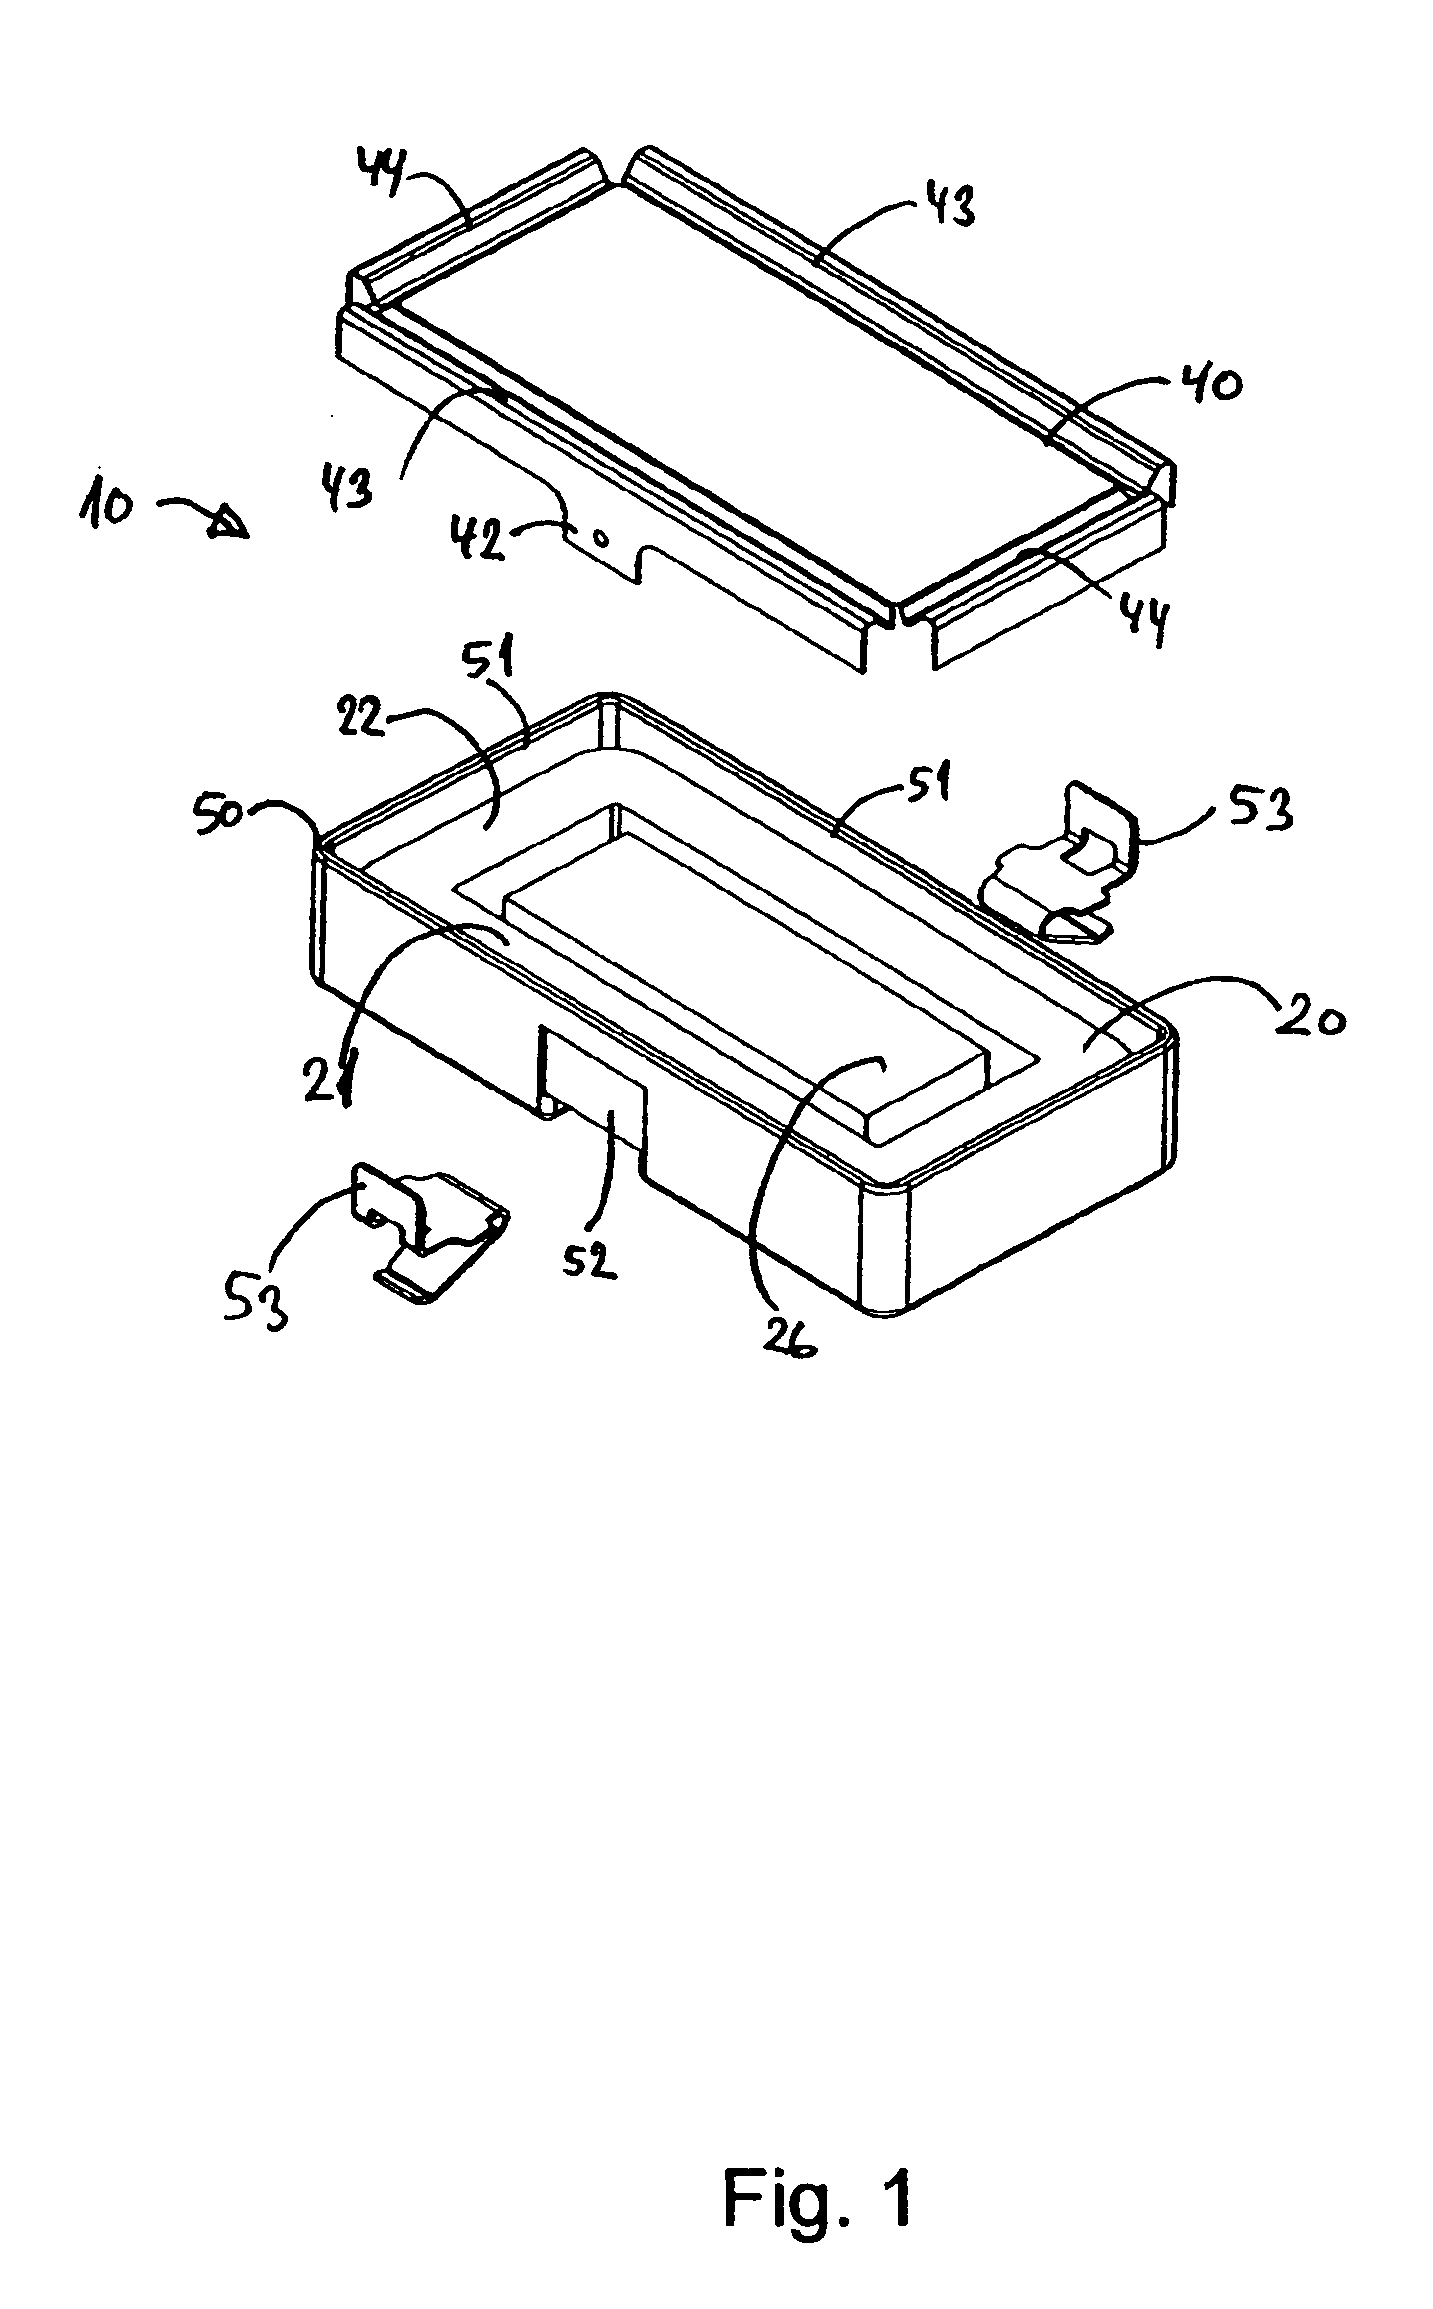 One-magnet rectangular transducer